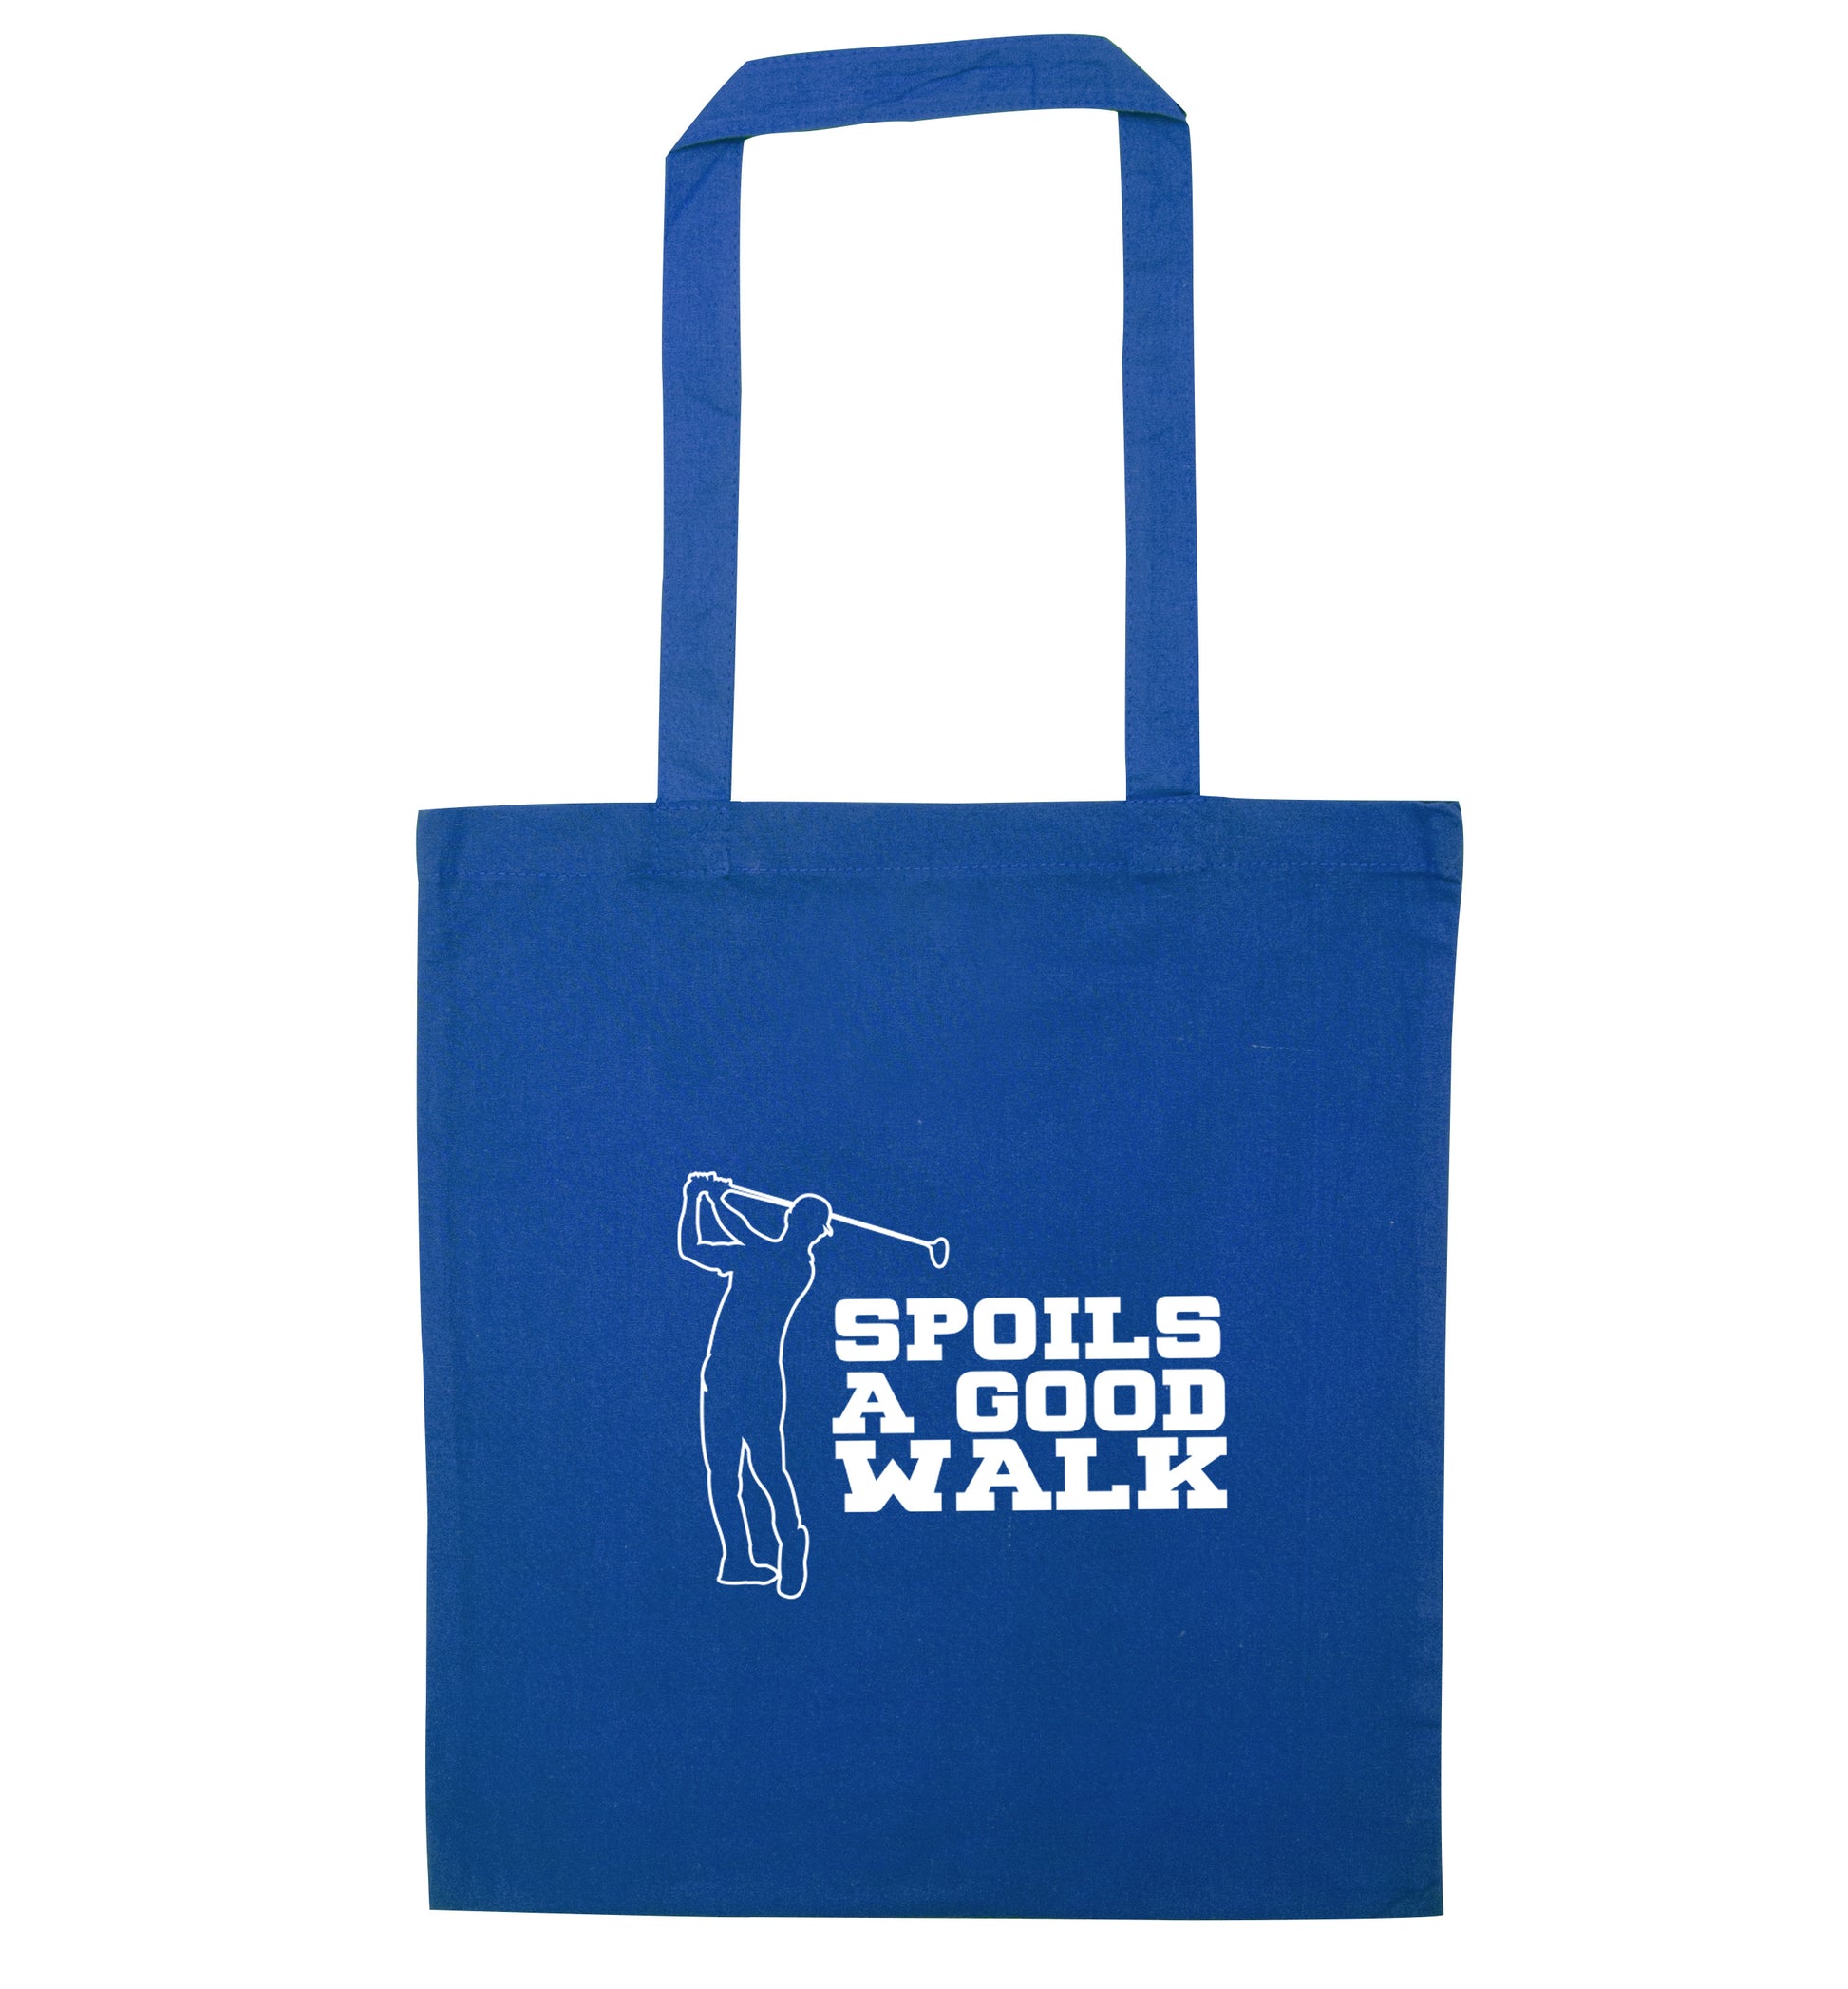 Golf spoils a good walk blue tote bag